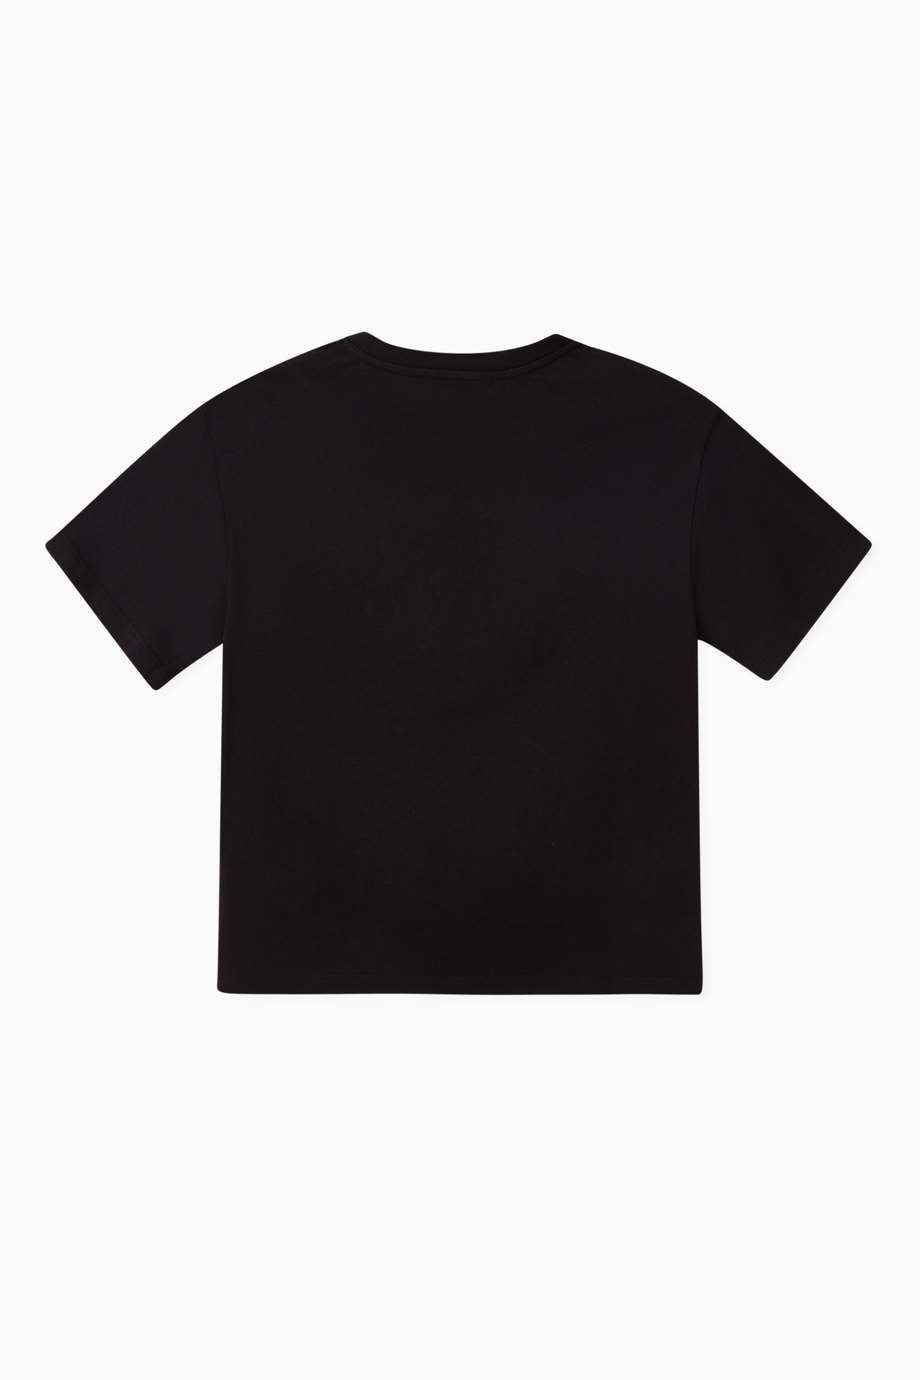 Shop Fendi Black Logo Stamp Cotton T-Shirt for Kids | Ounass UAE